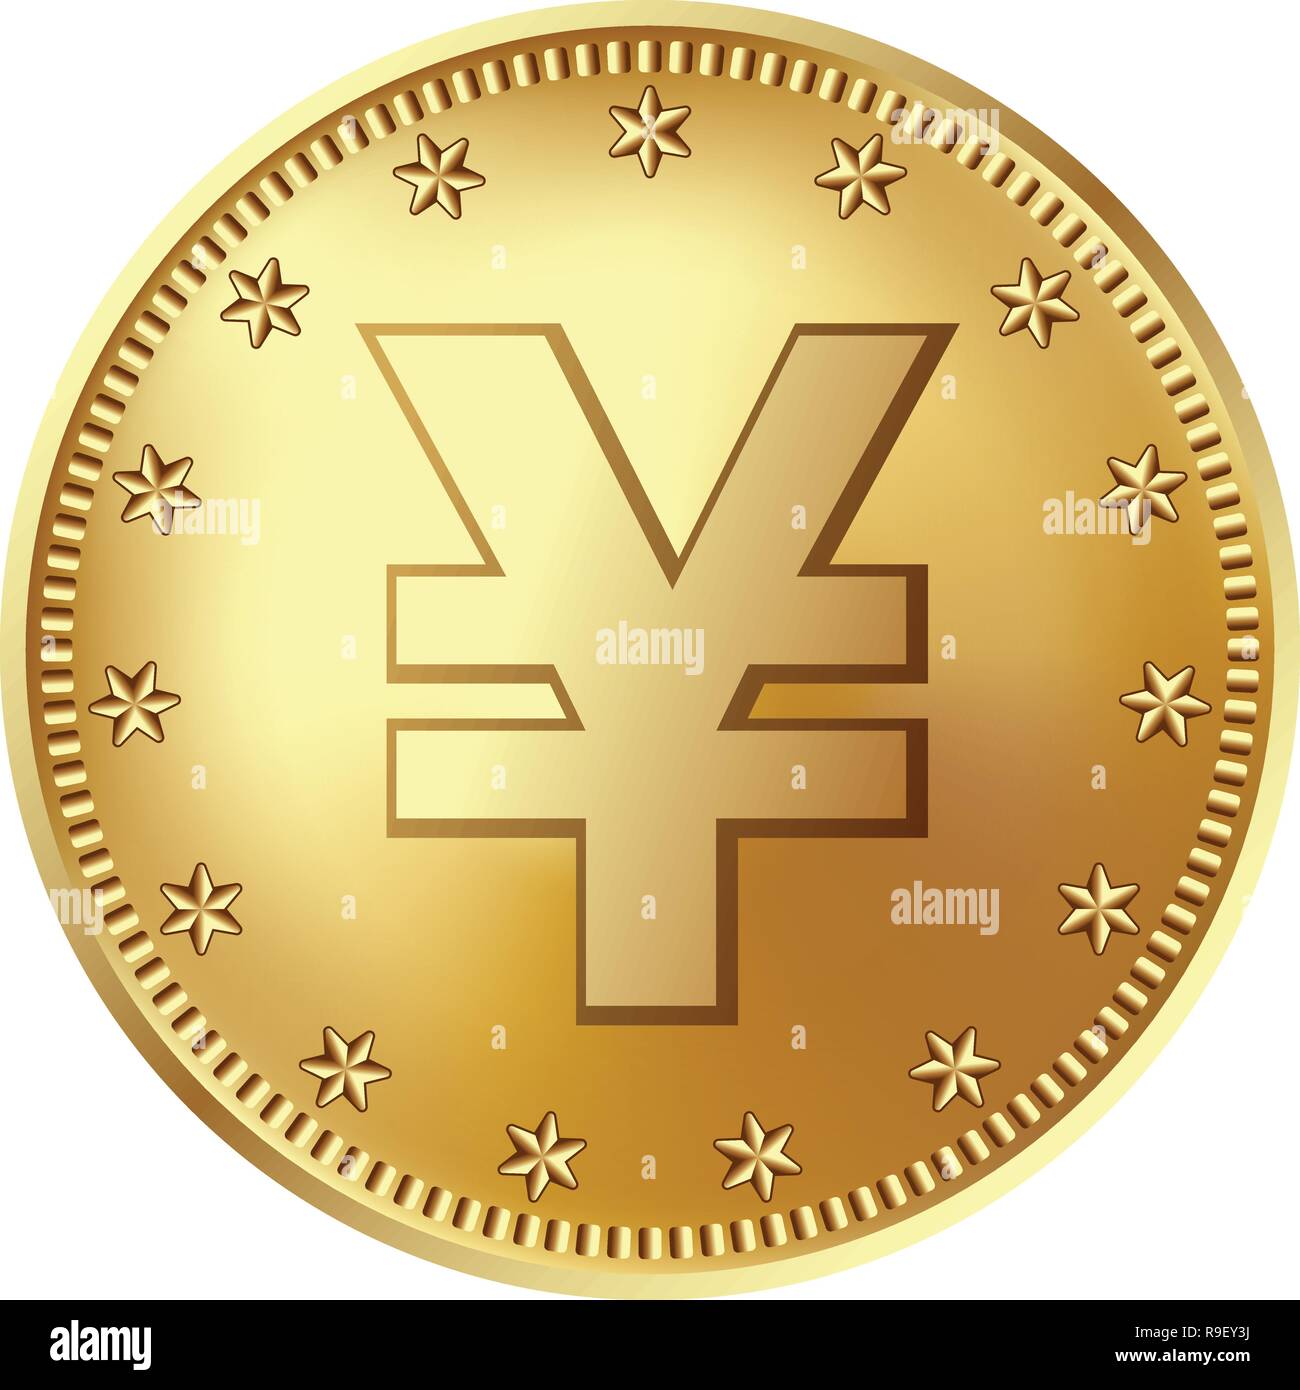 Golden Japanese yen or Chinese yuan coin, money. Stock Vector